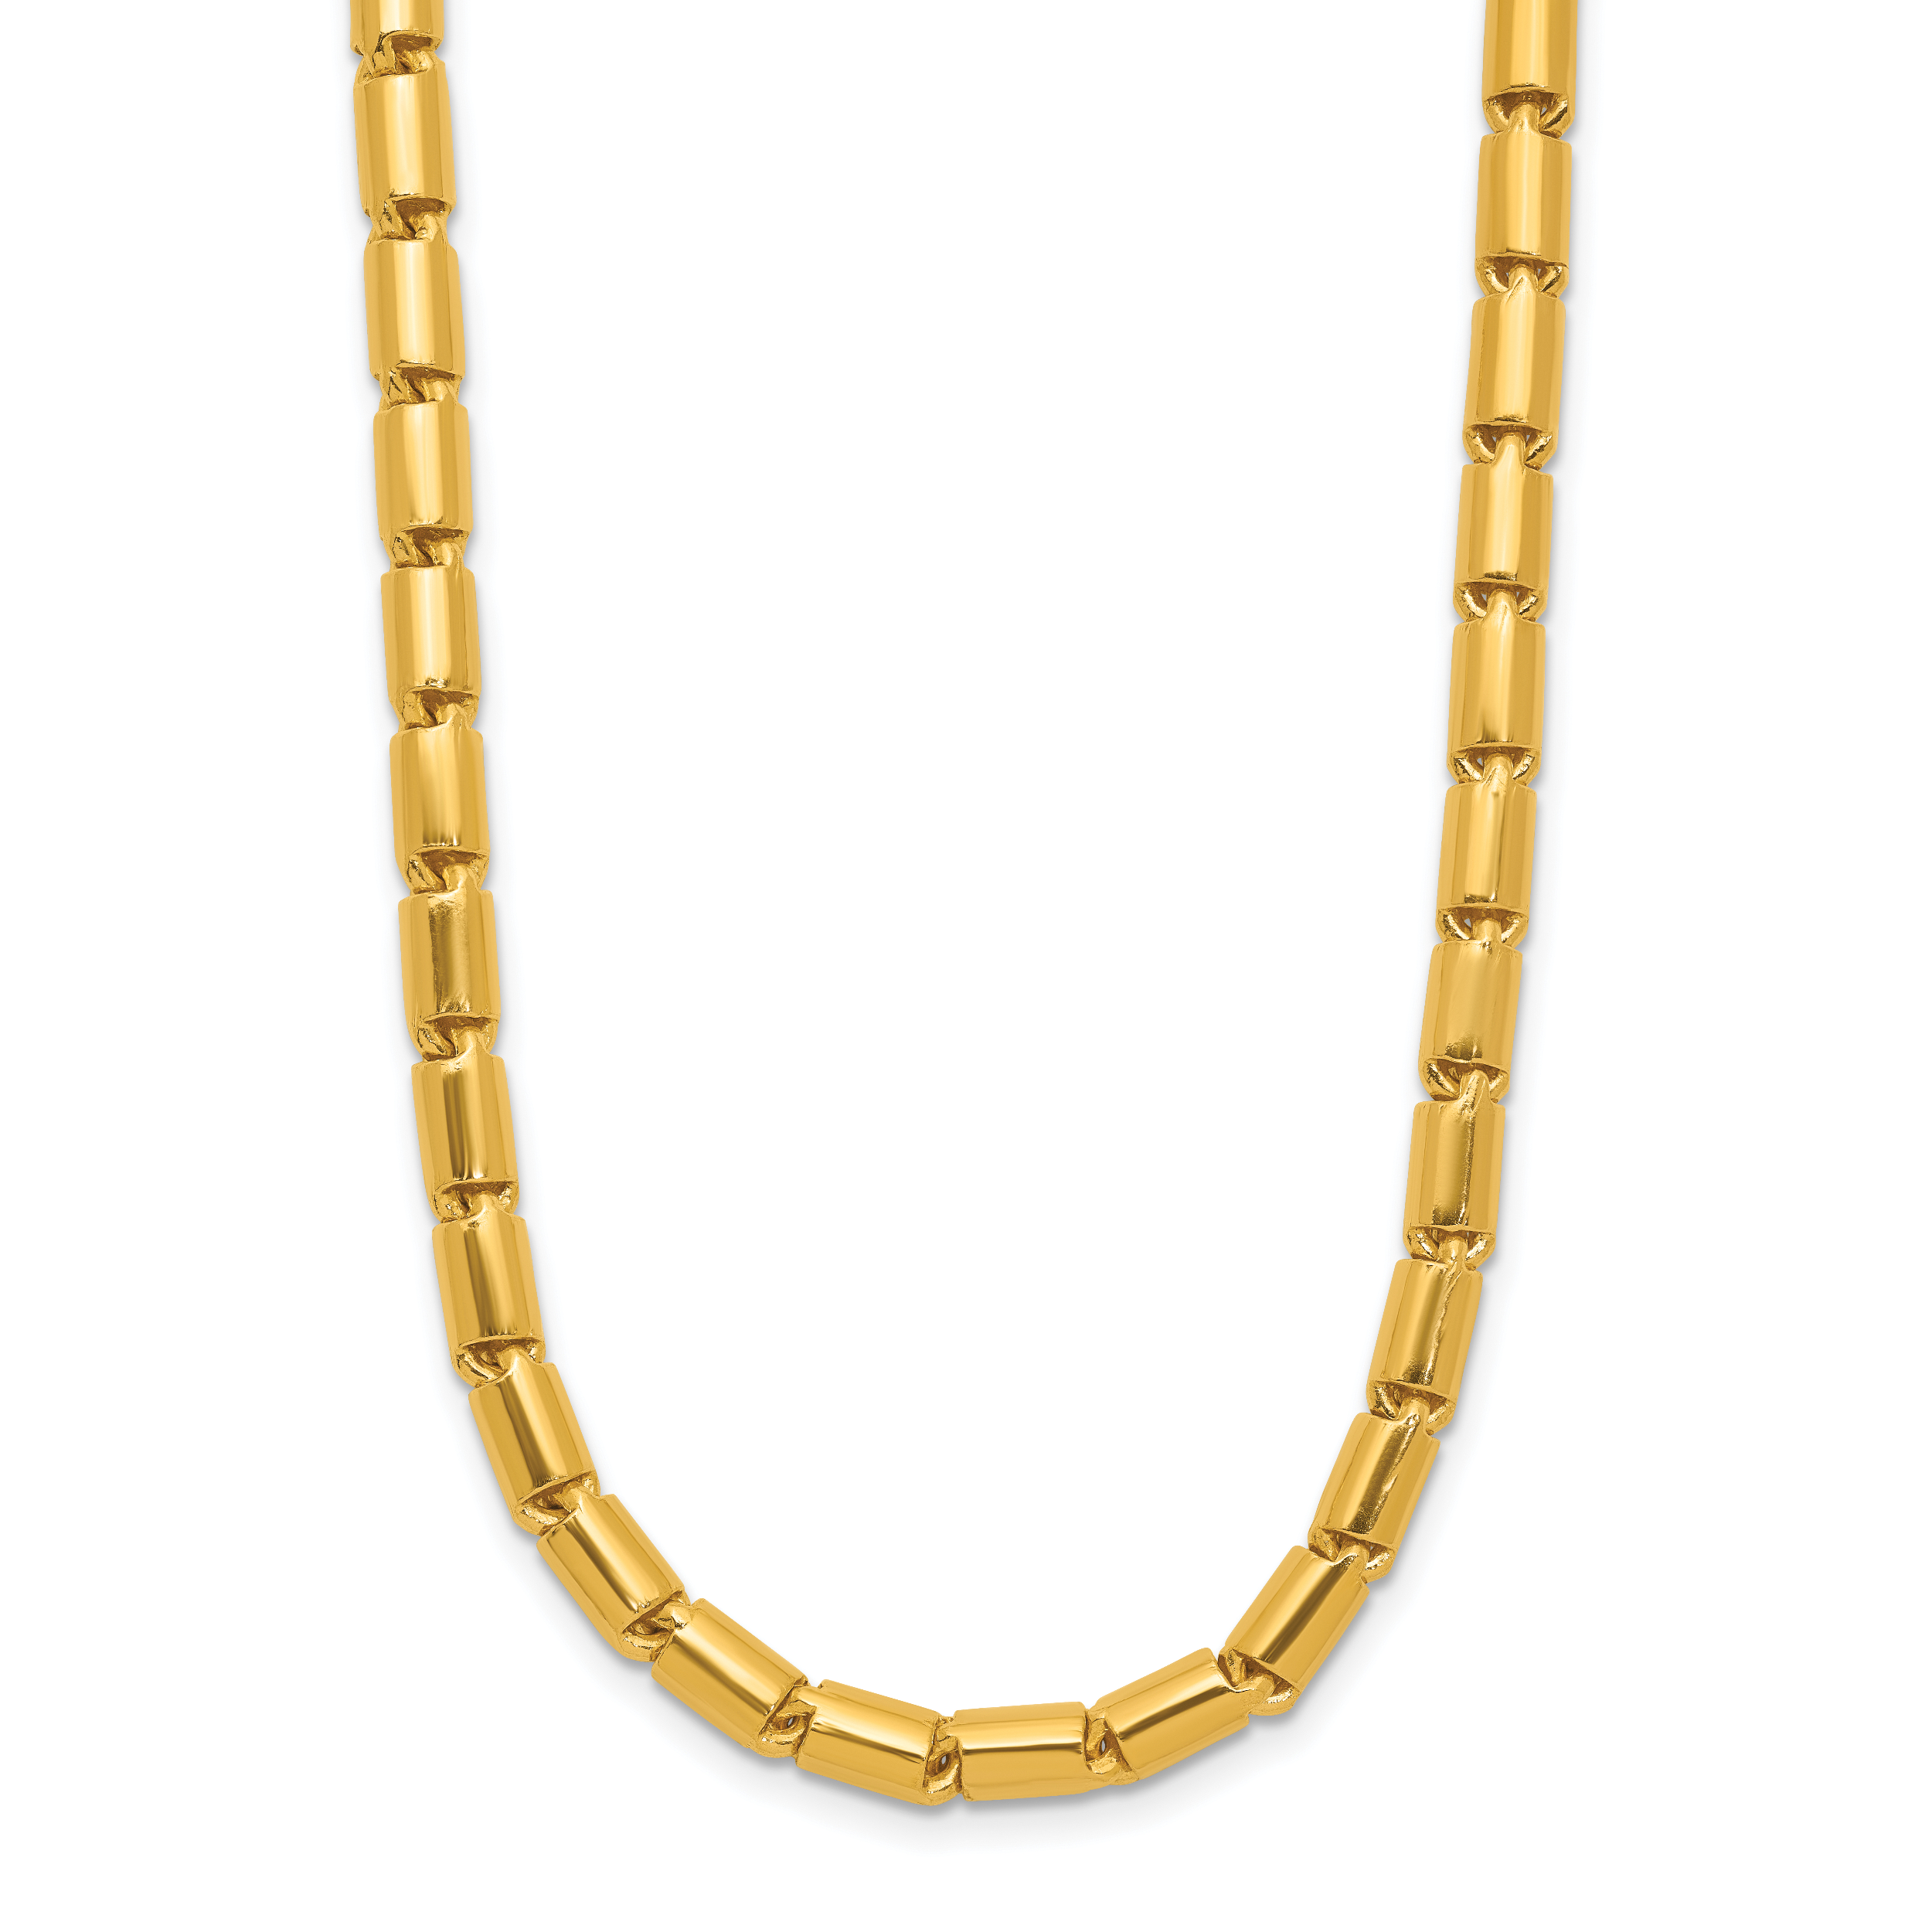 Italian Gold Jewelry Women | Brazilian Gold Jewelry | Brazilian Gold Jewelry  Dubai - Jewelry Sets - Aliexpress